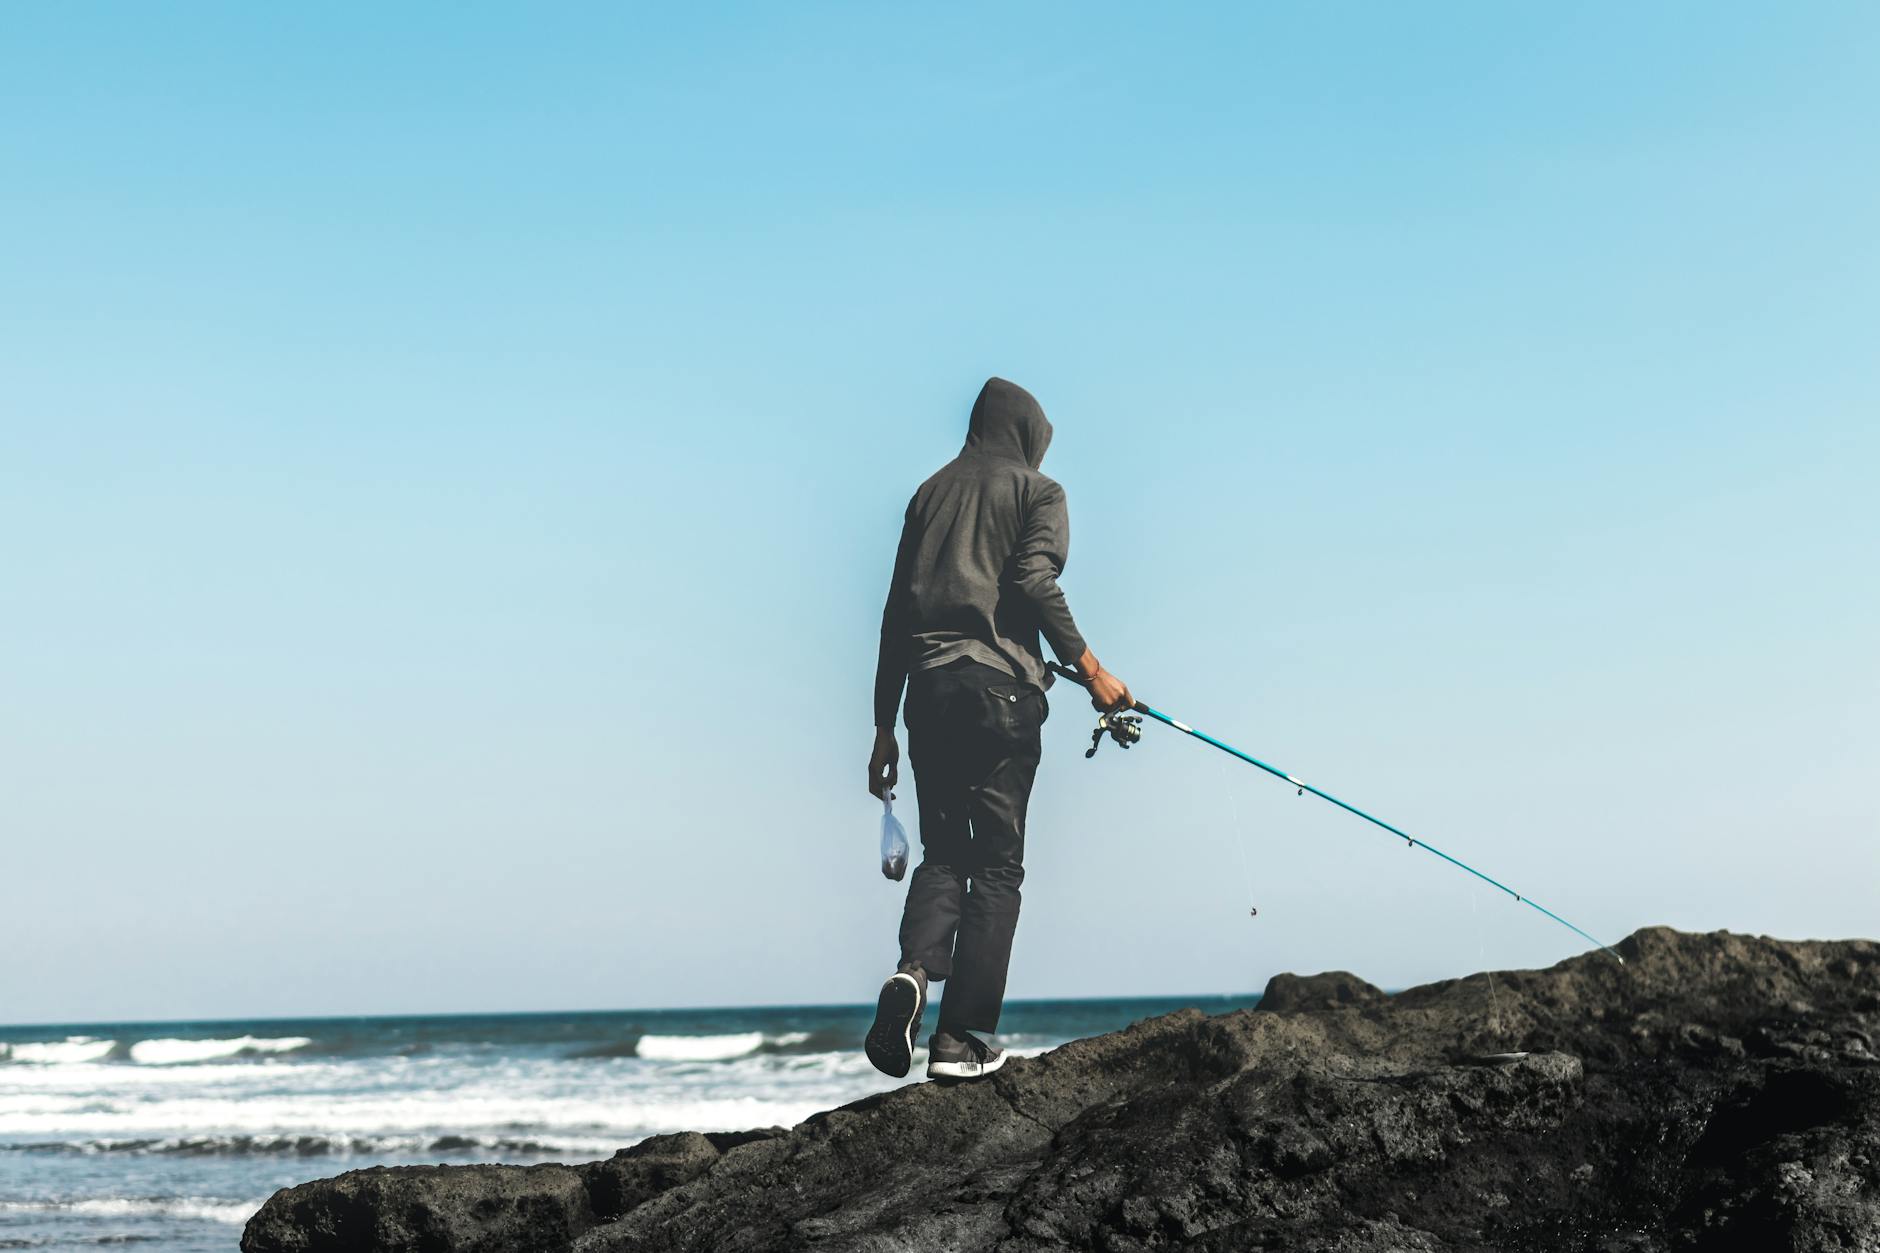 Man holding a fishing rod